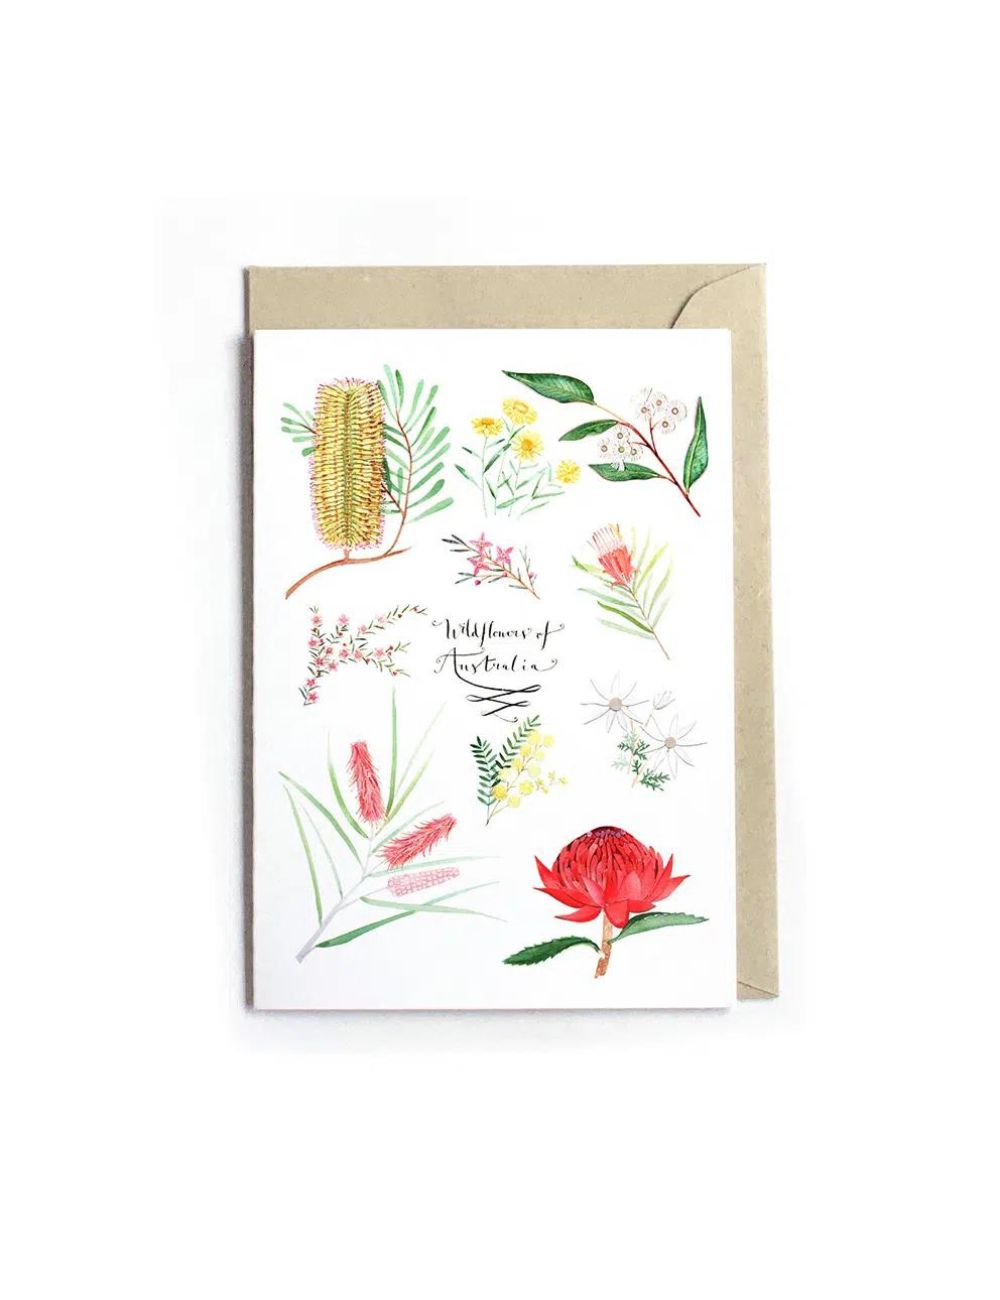 Wildflowers of Australia - Greeting Card